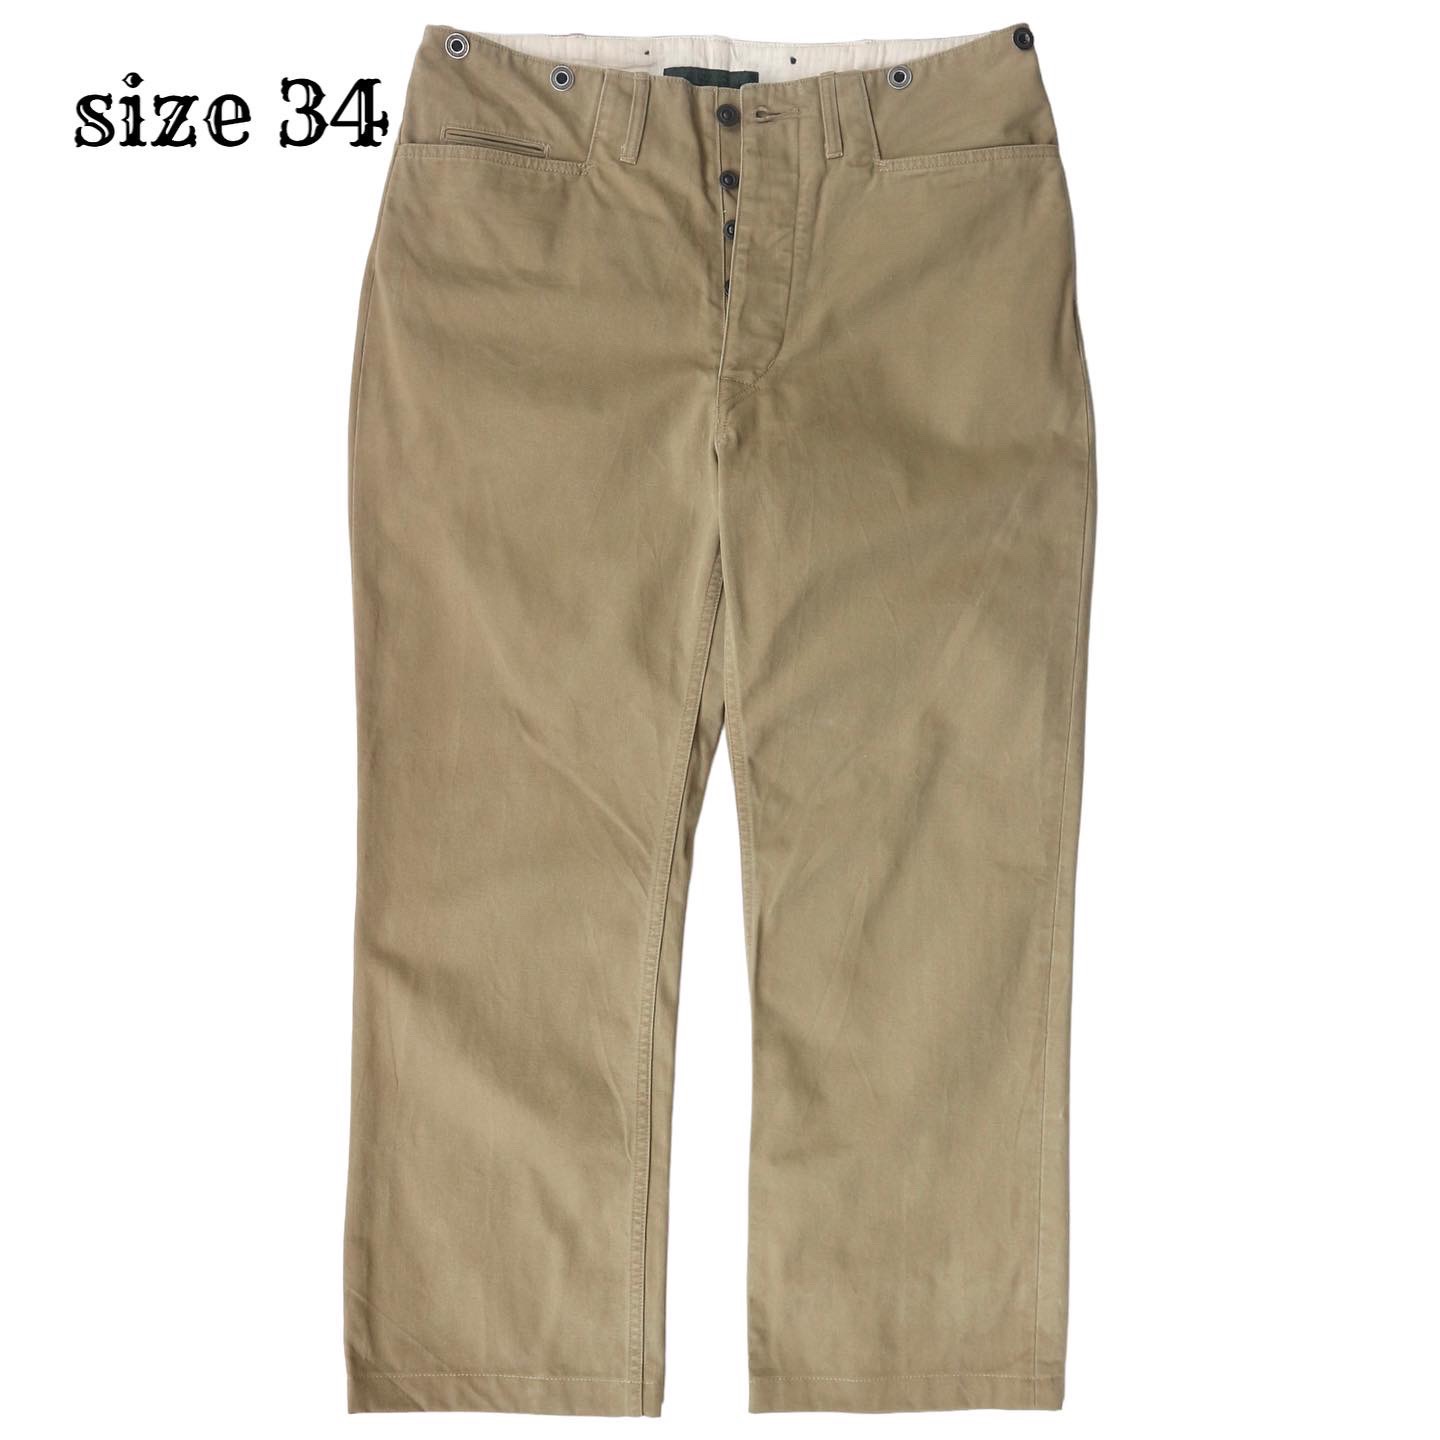 Phigvel Pants Size 34